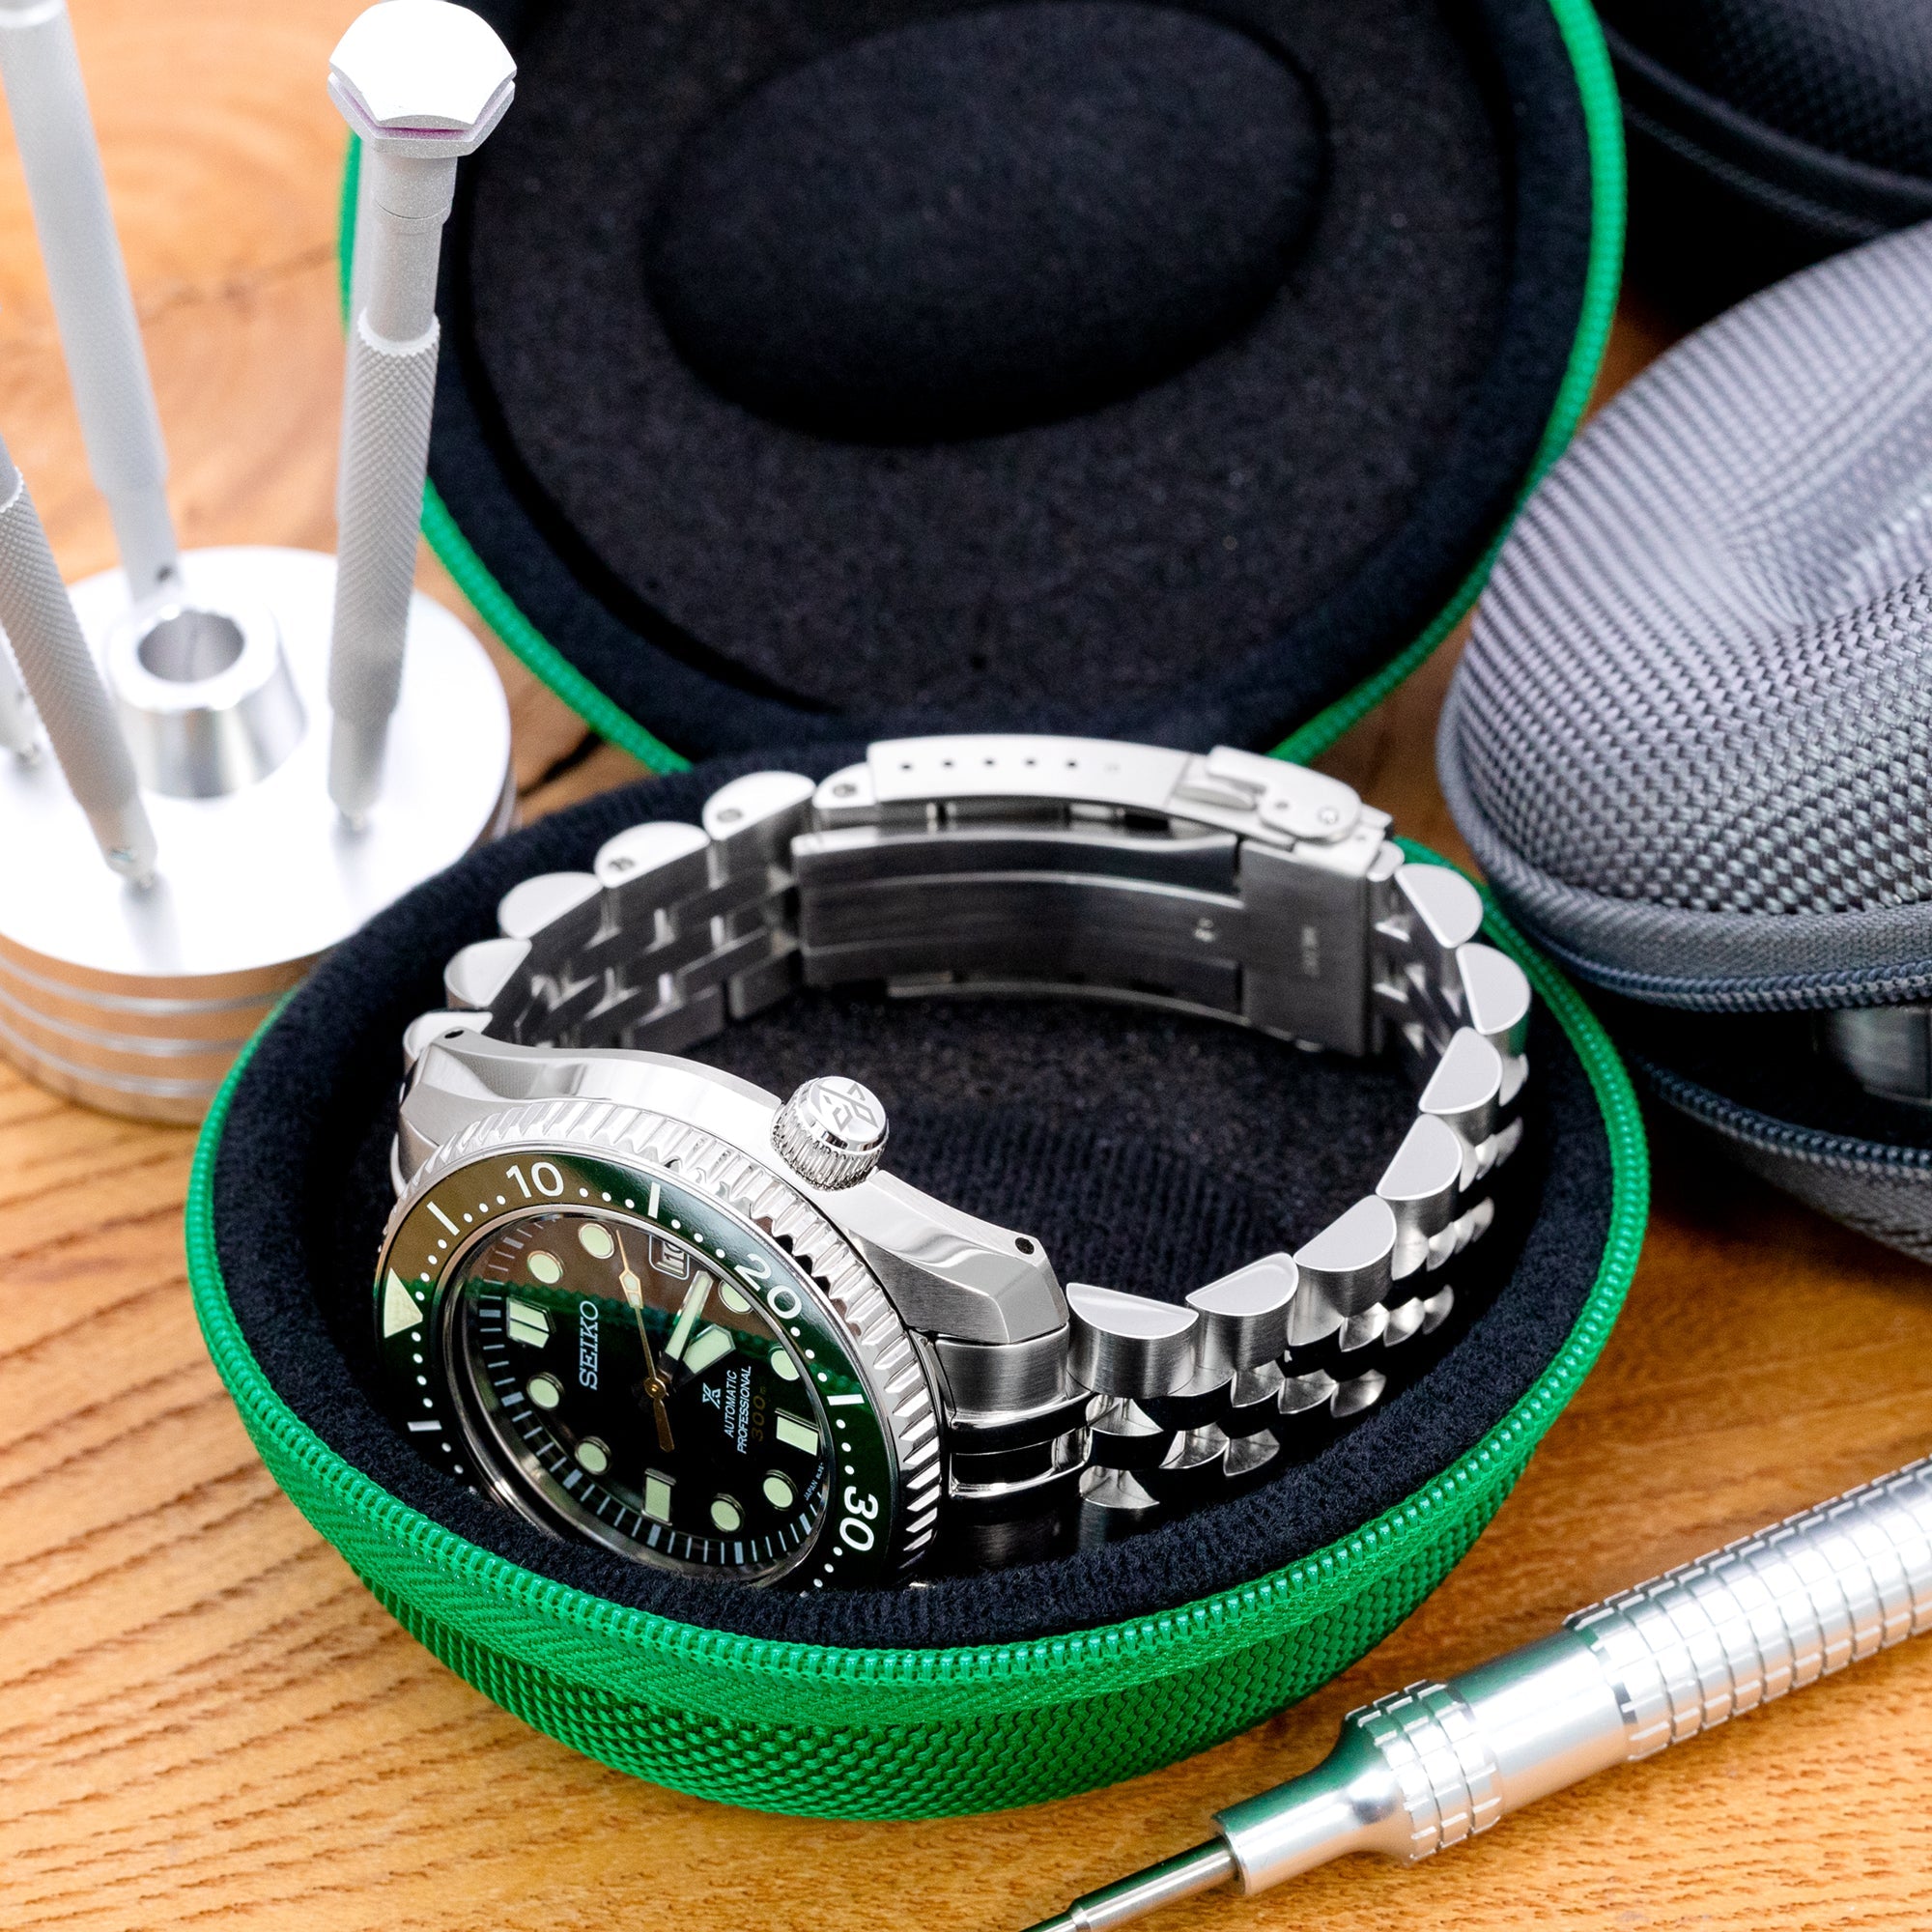 Round Watch Travel Hard Case Single Watch Box with Zipper, Grey Strapcode Watch Bands